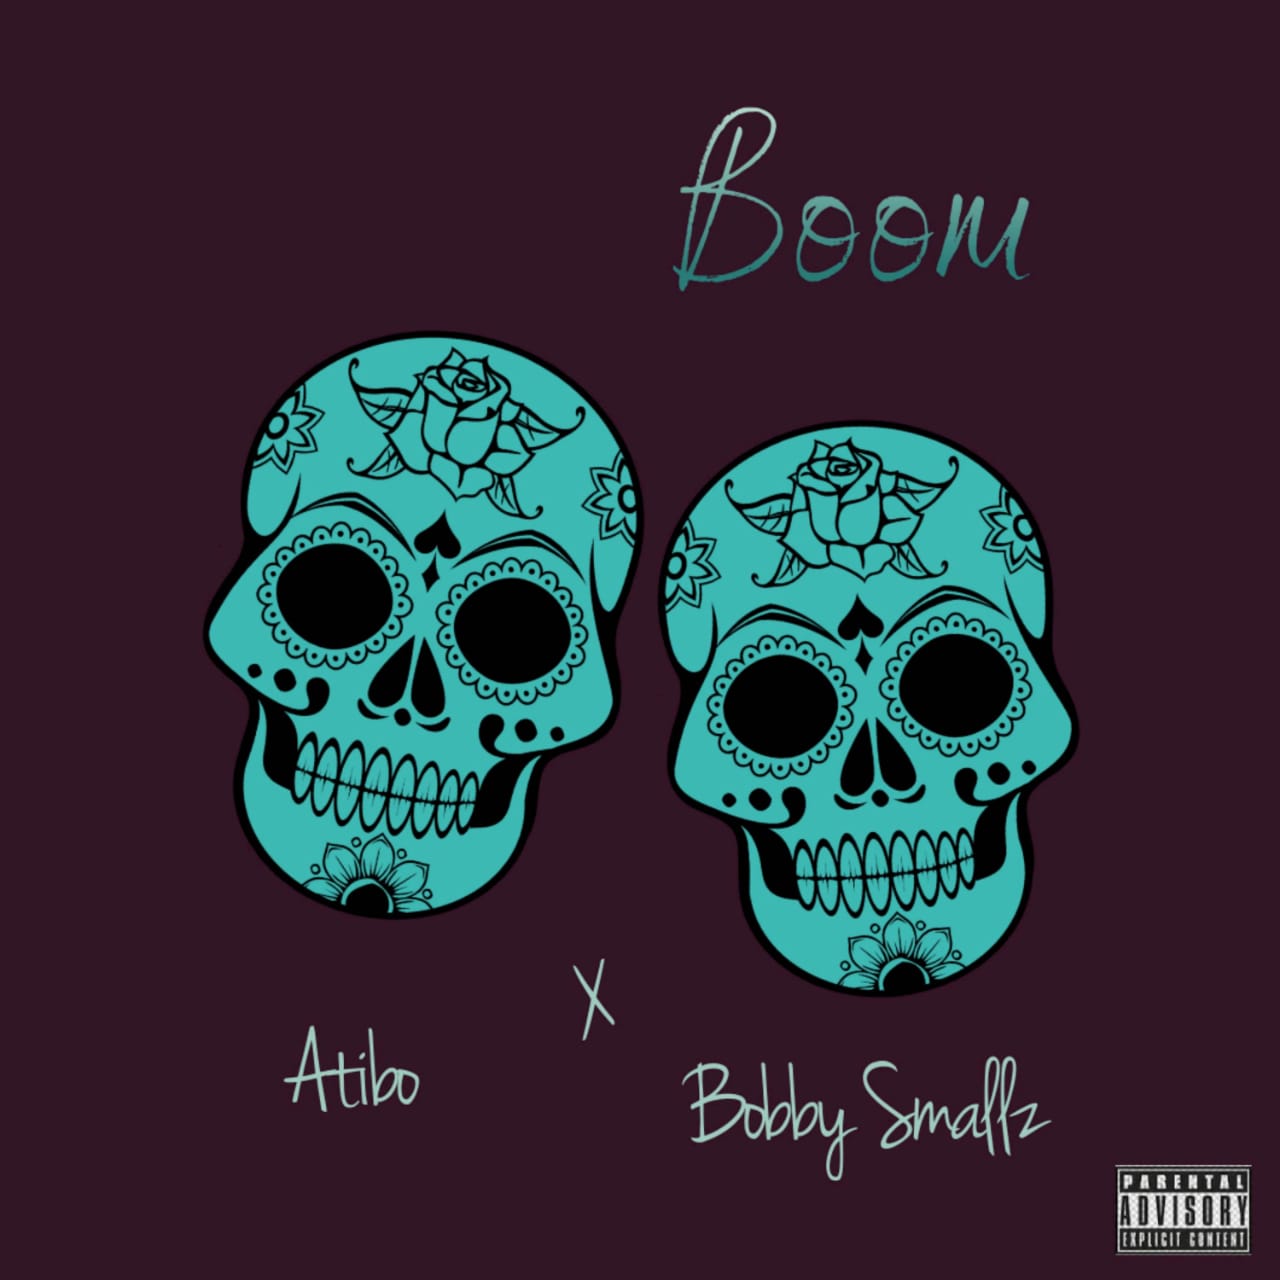 Atibo x Bobby Smallz -"Boom" 1